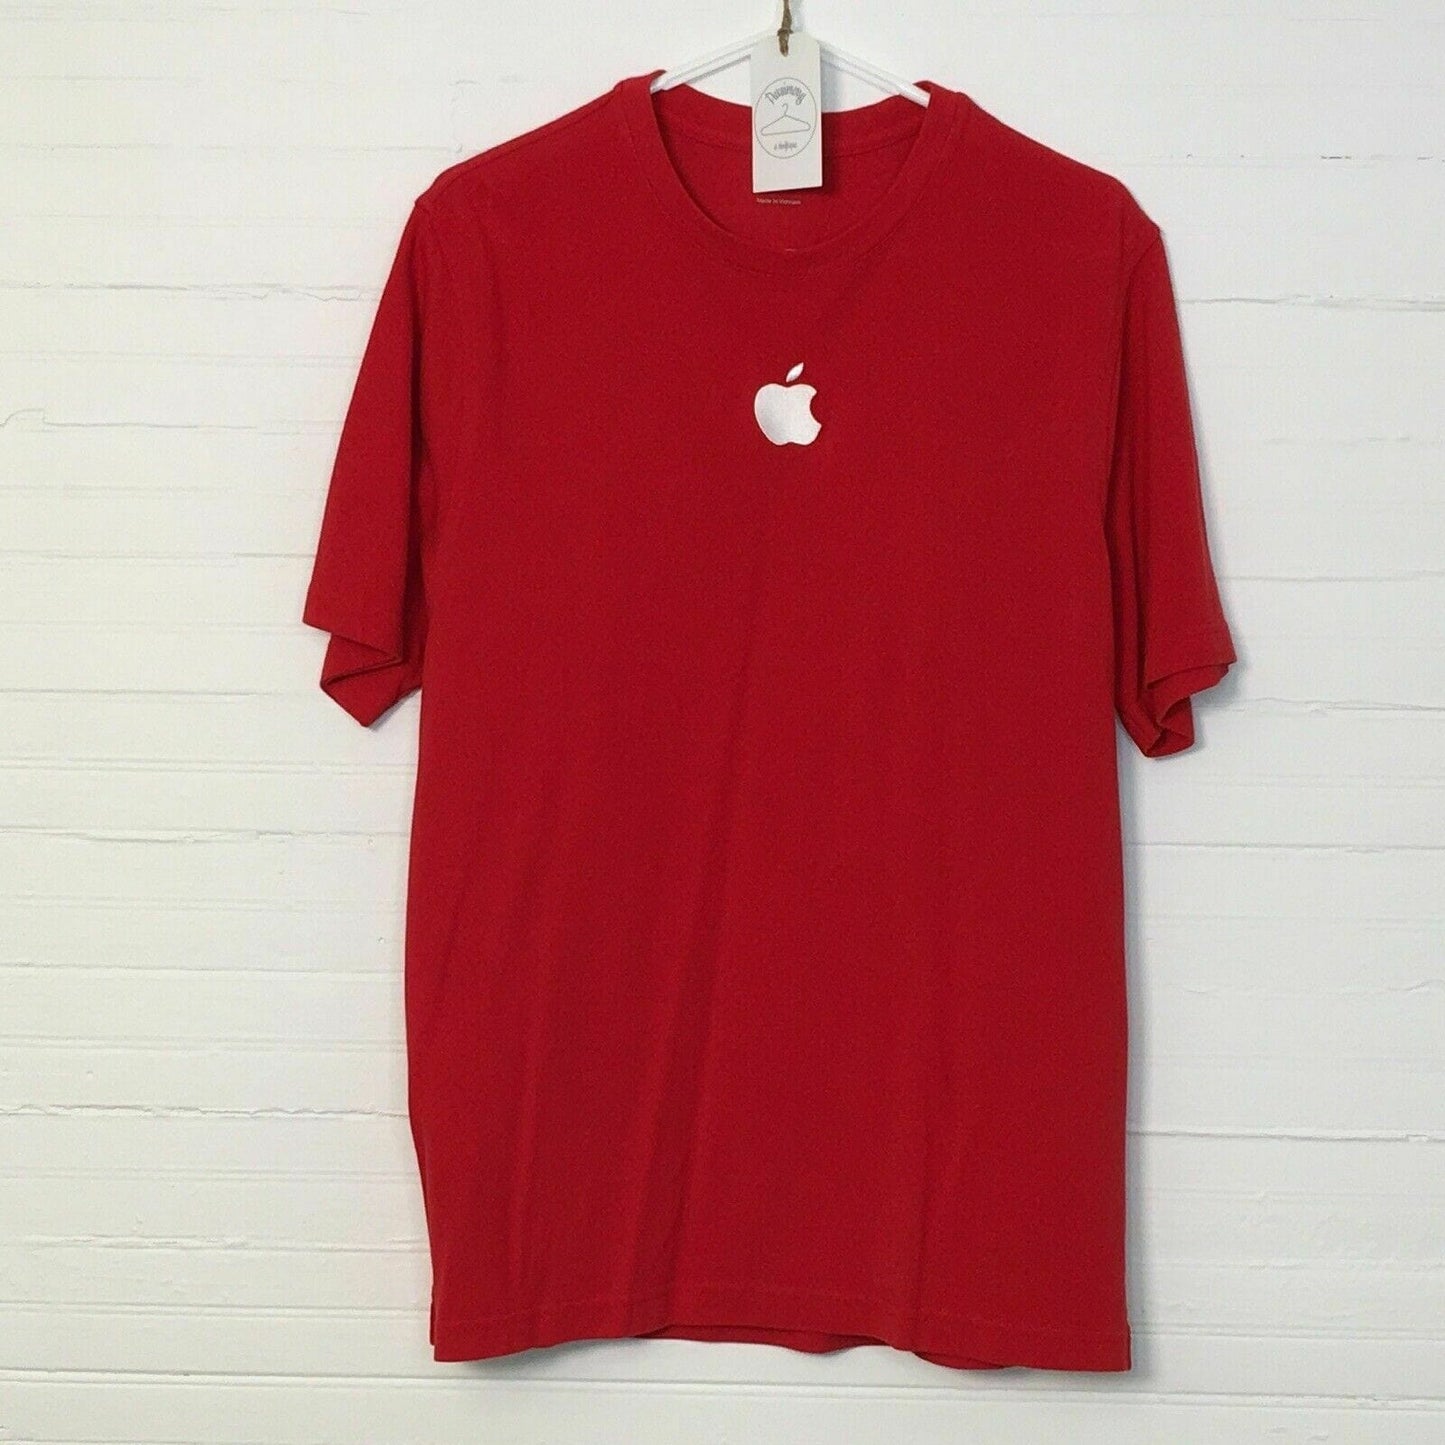 Stylish Apple Mens Red Cotton T-Shirt Short Sleeve L